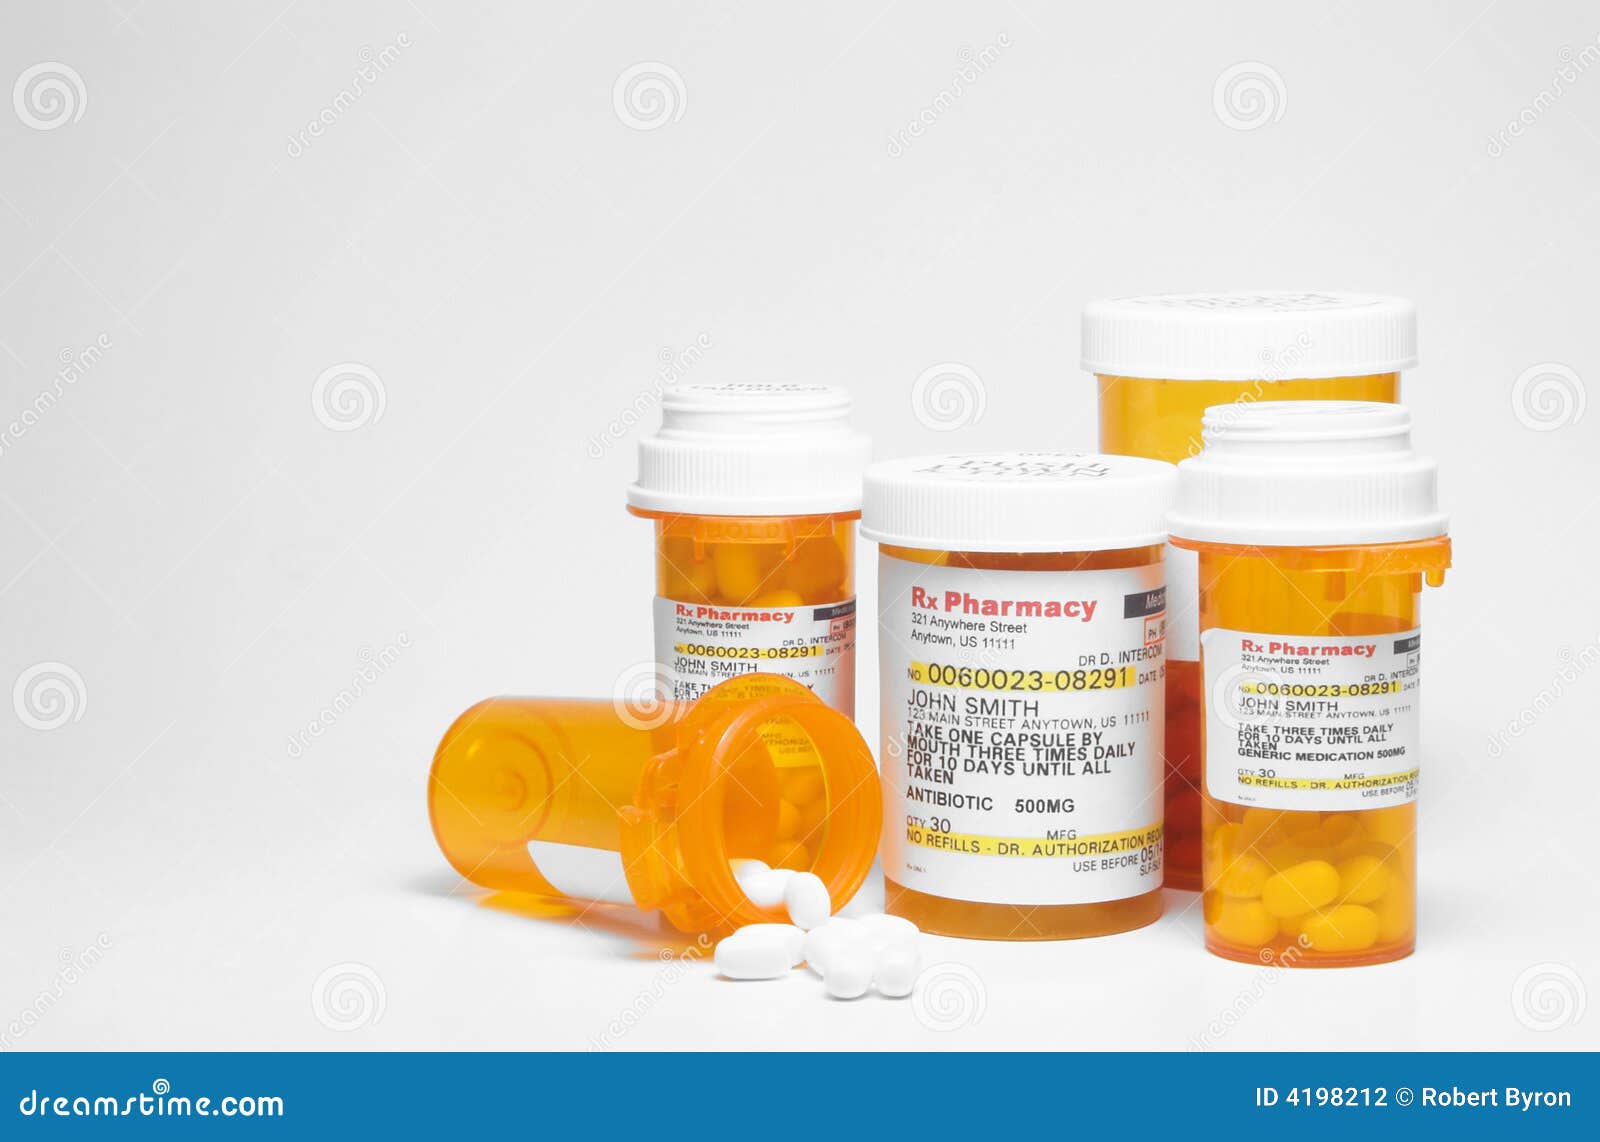 prescription medication